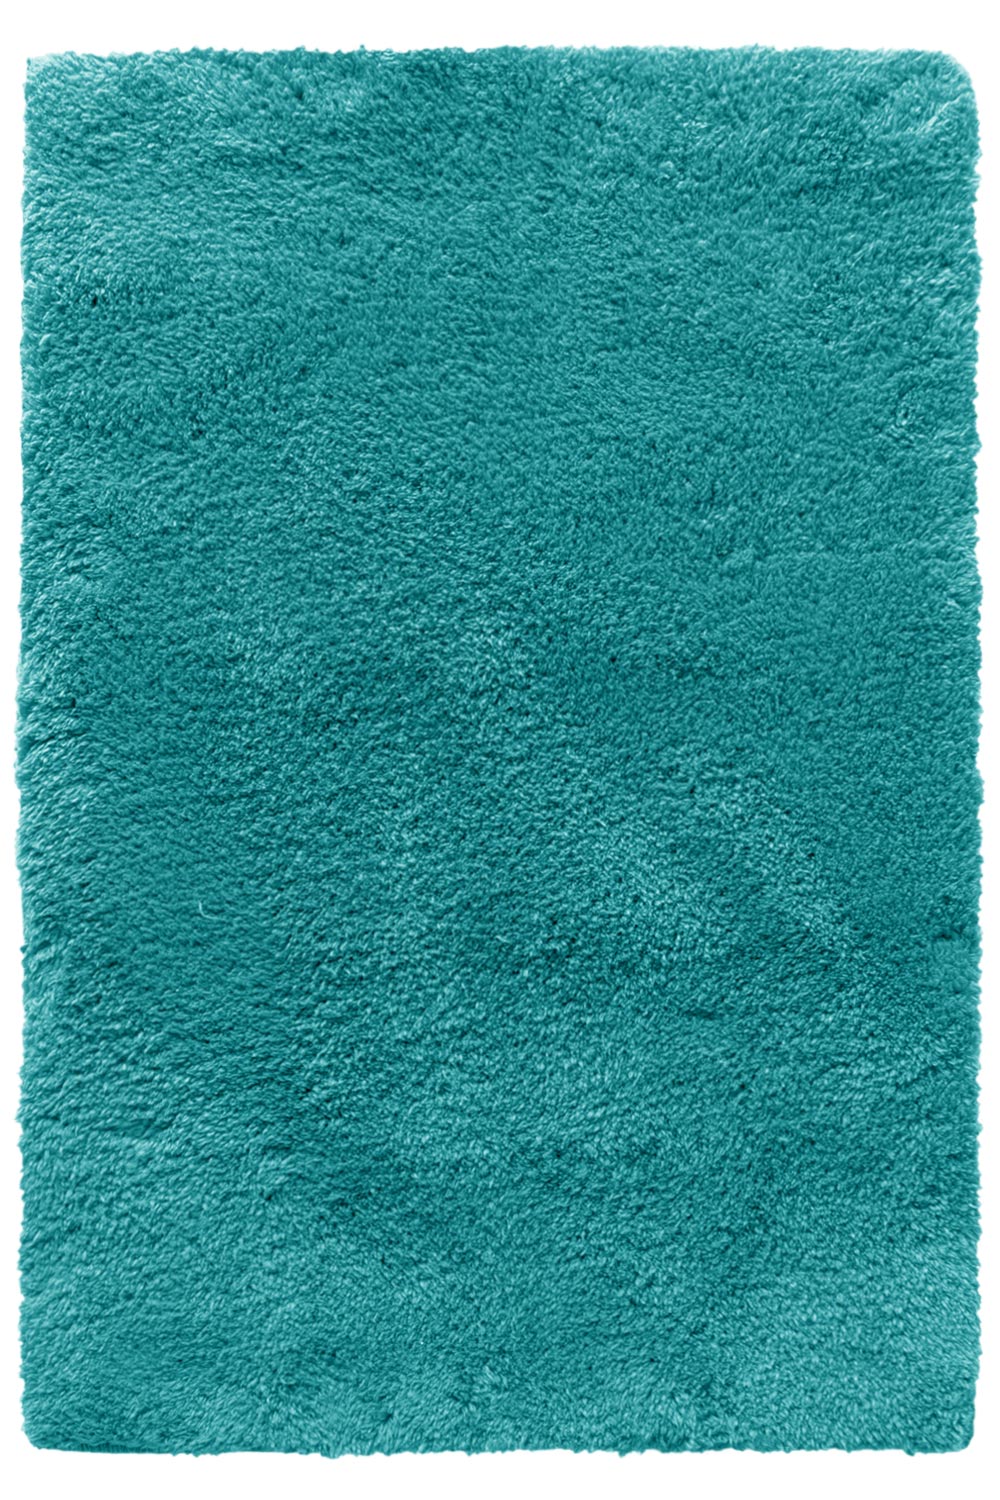 Kusový koberec SPRING turquise 40x60 cm